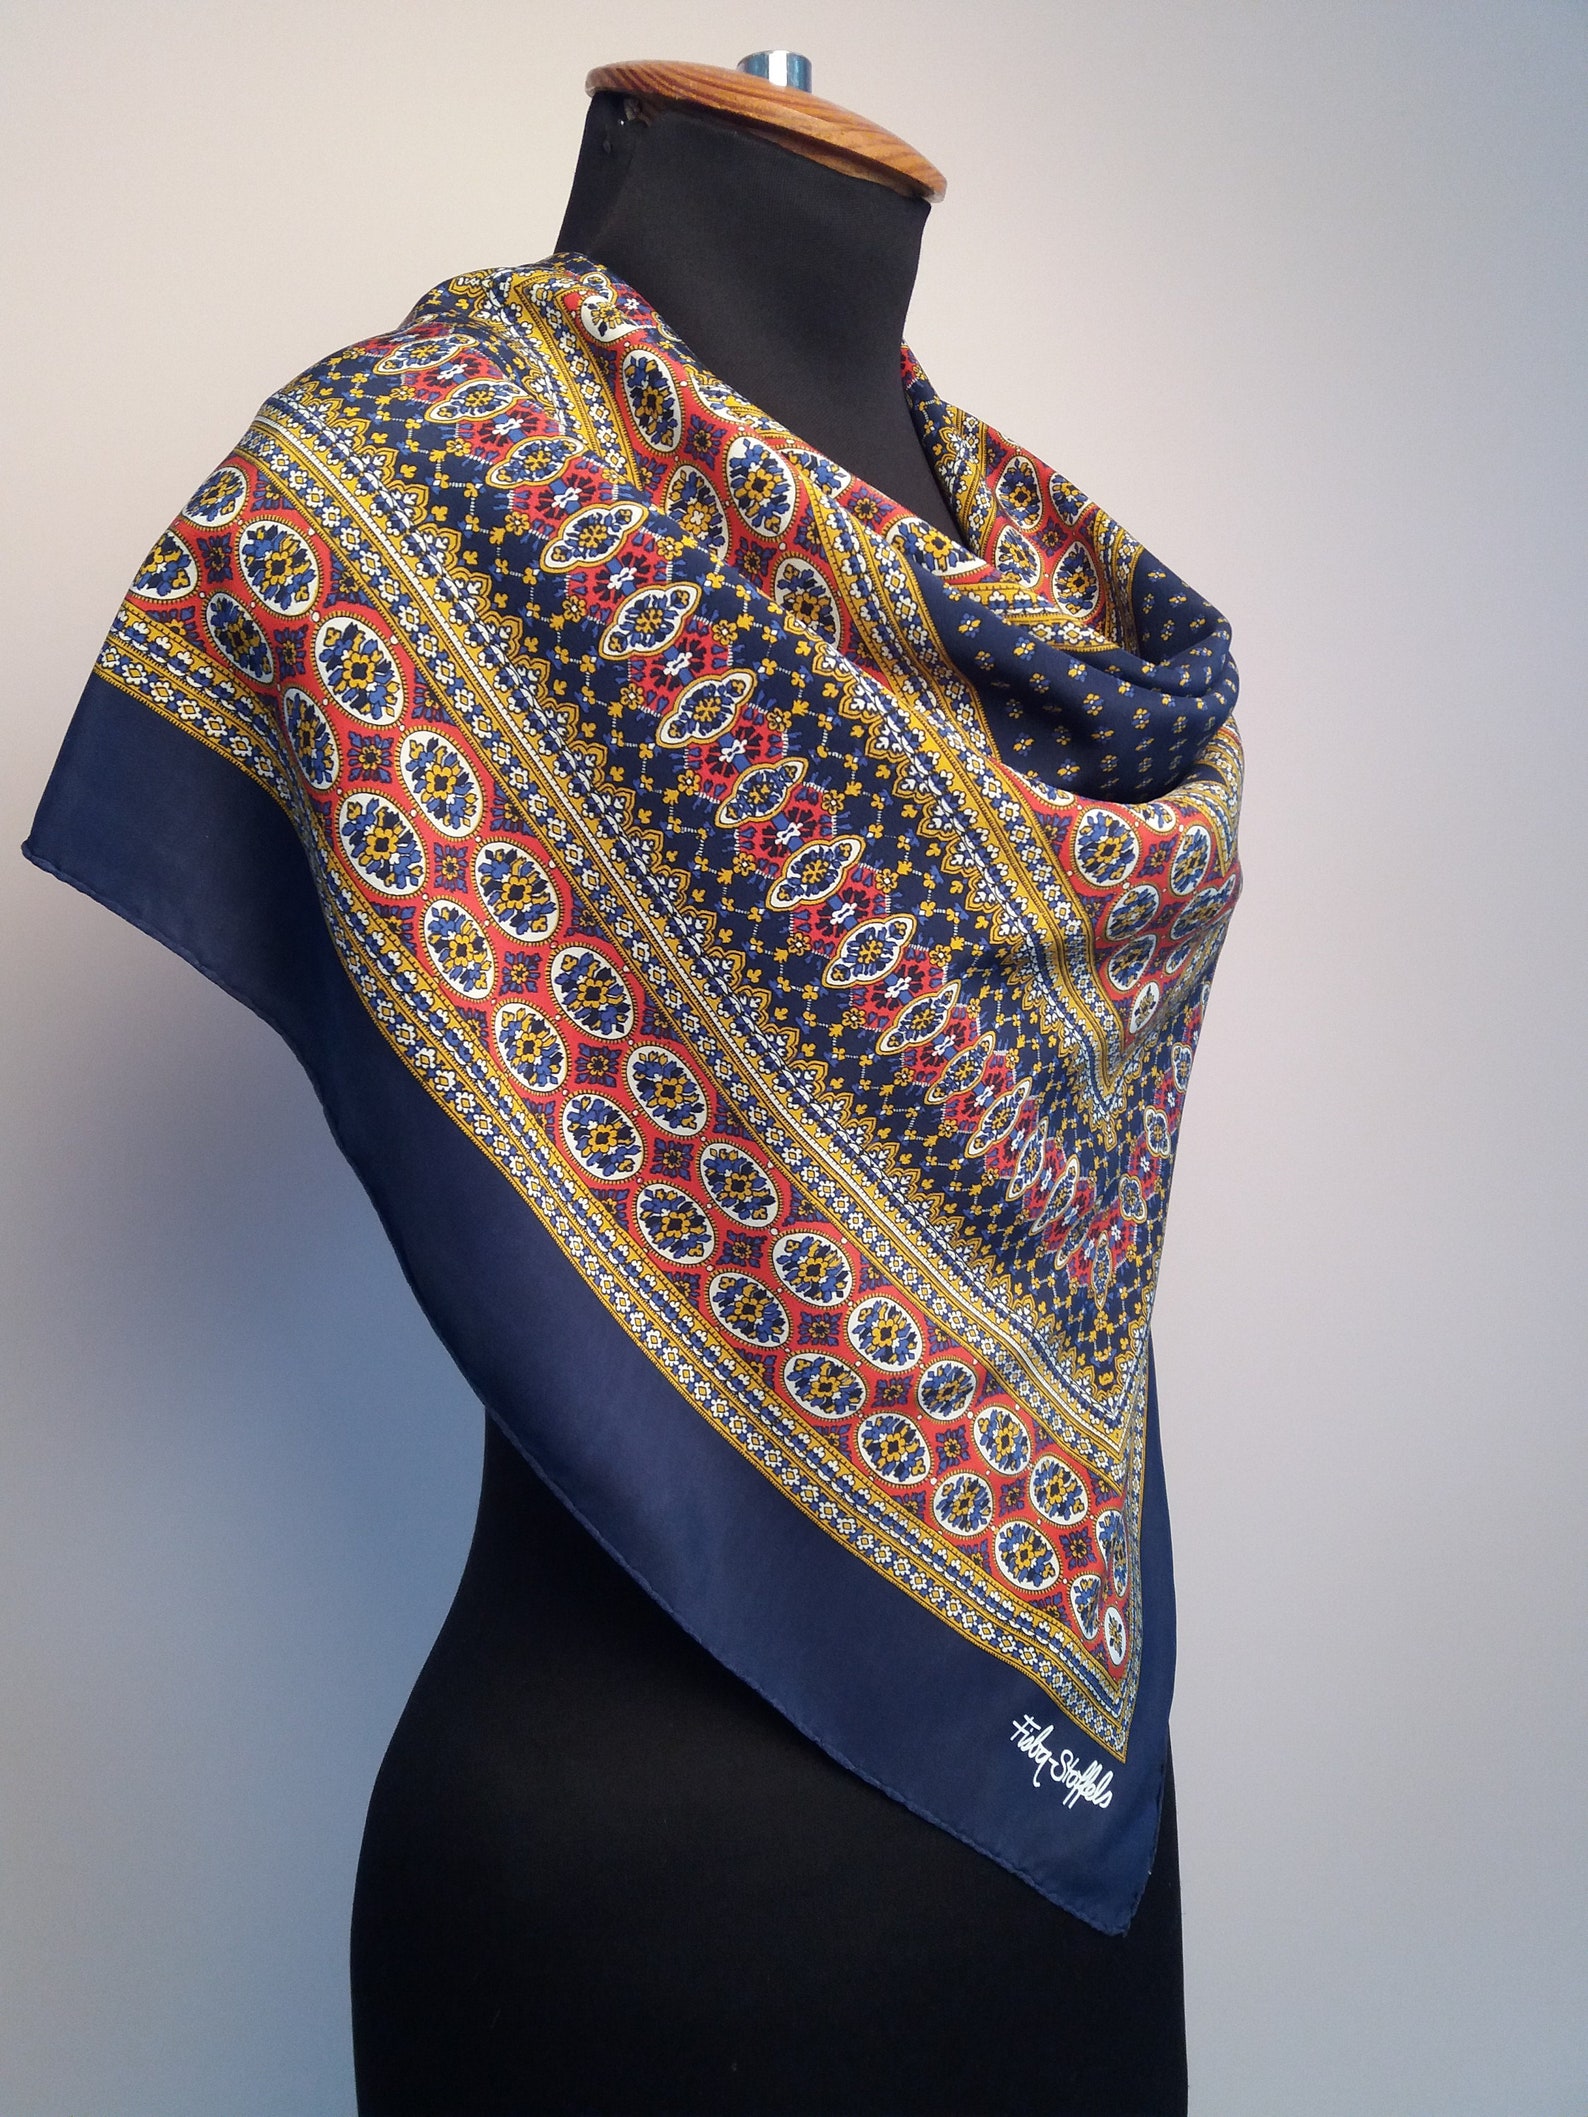 Fisba Stoffels Multicolored Silk Scarf/FoulardVintage | Etsy